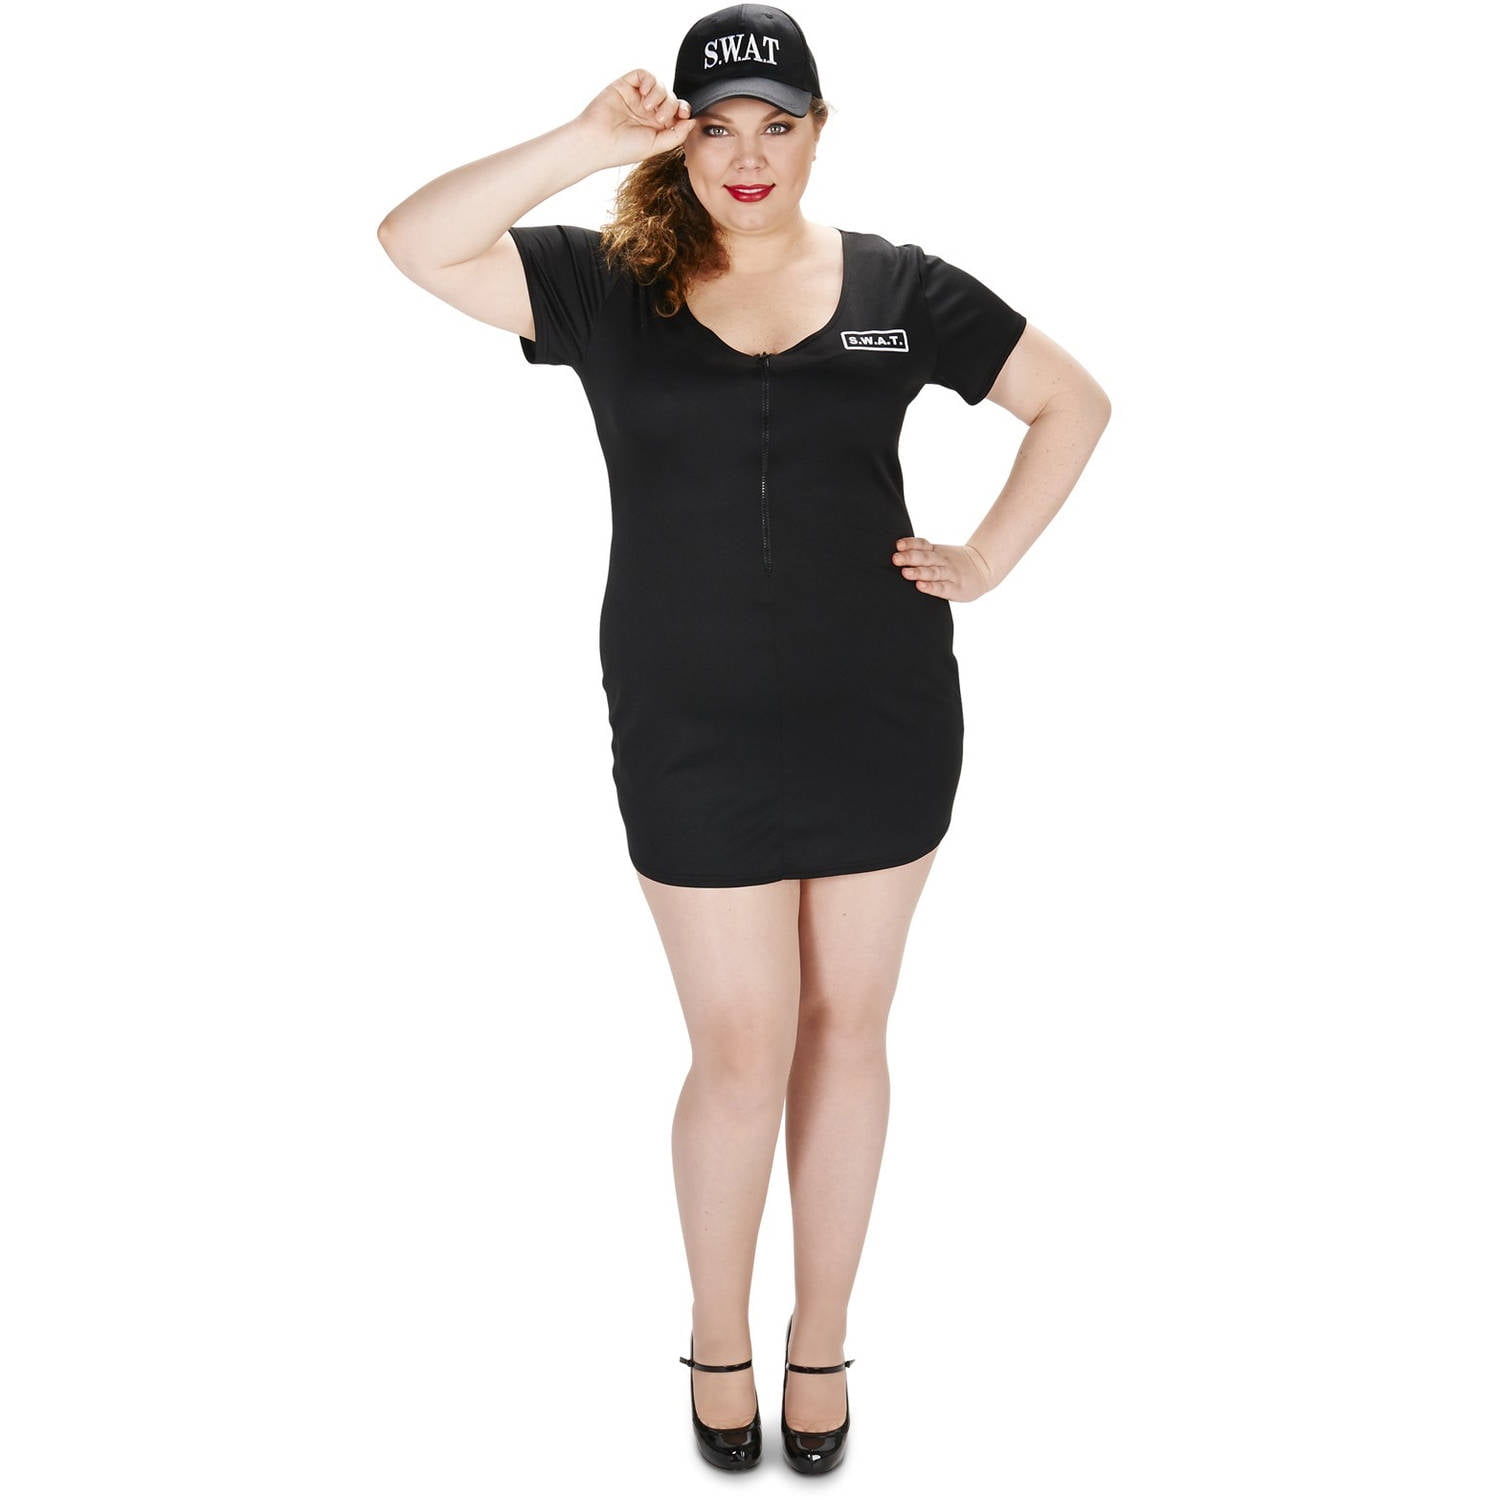 S.W.A.T. Dress Women's Plus Size Adult Halloween - Walmart.com